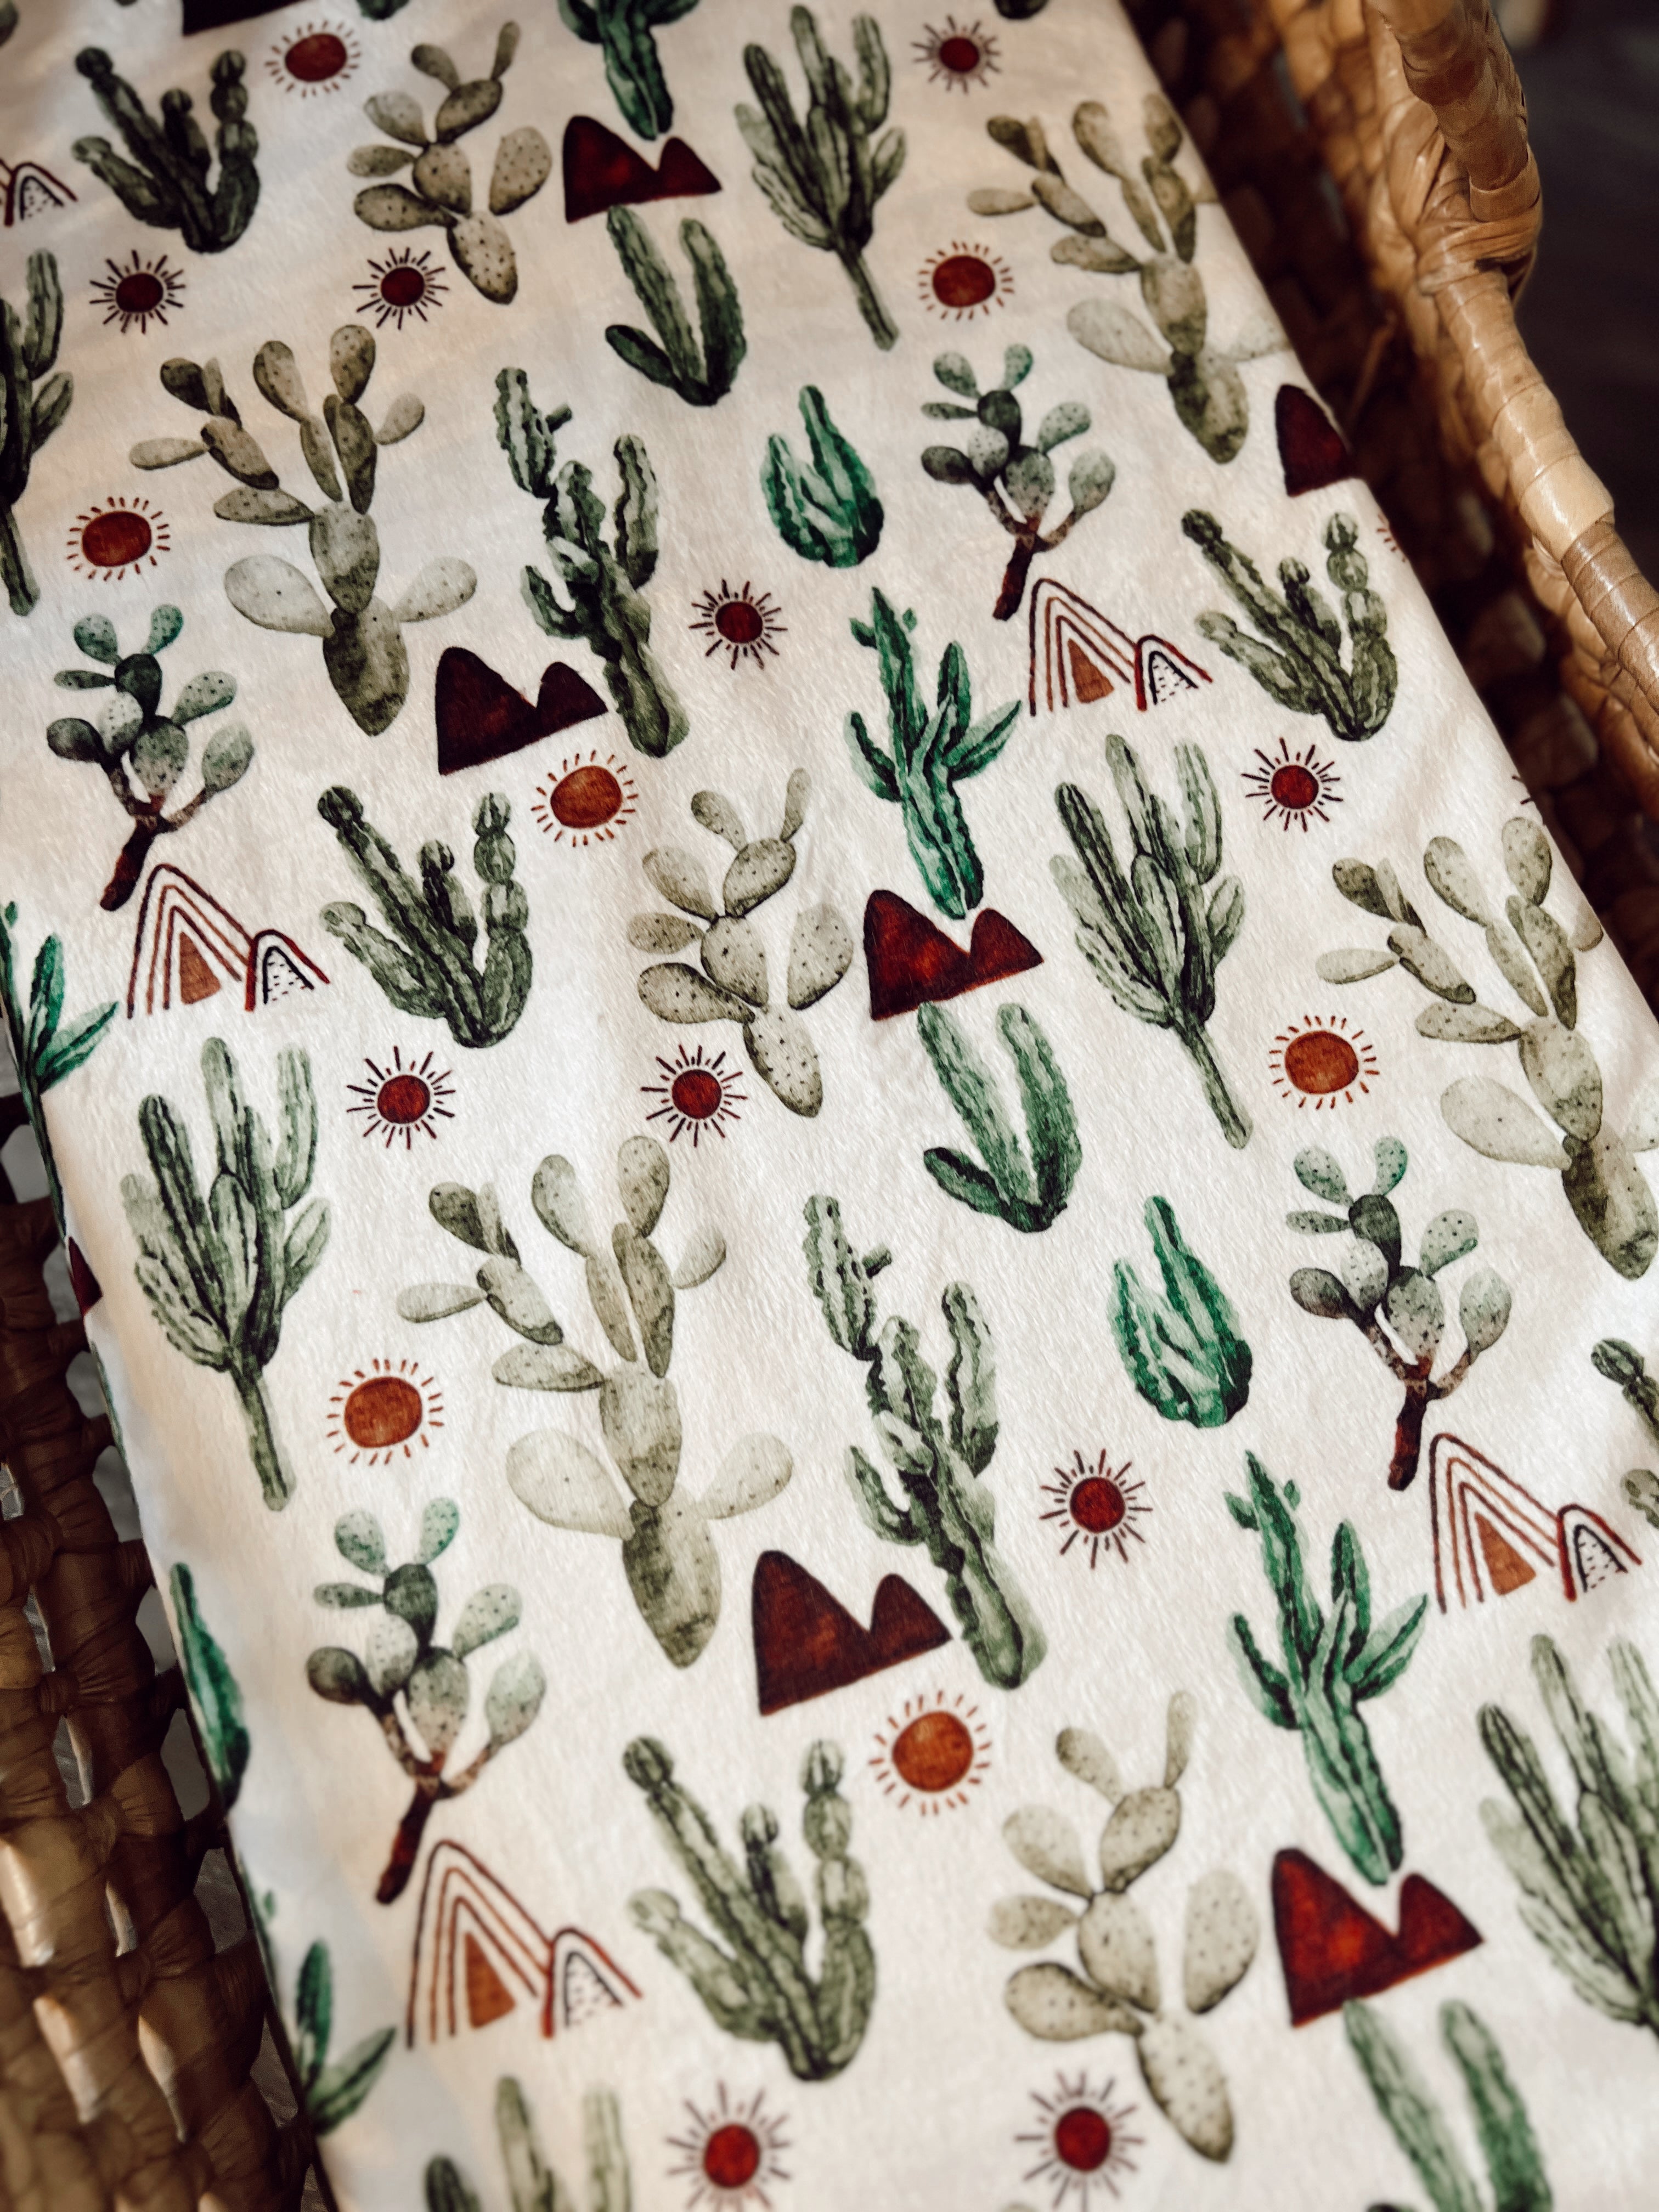 Custom bassinet minky cover in cactus